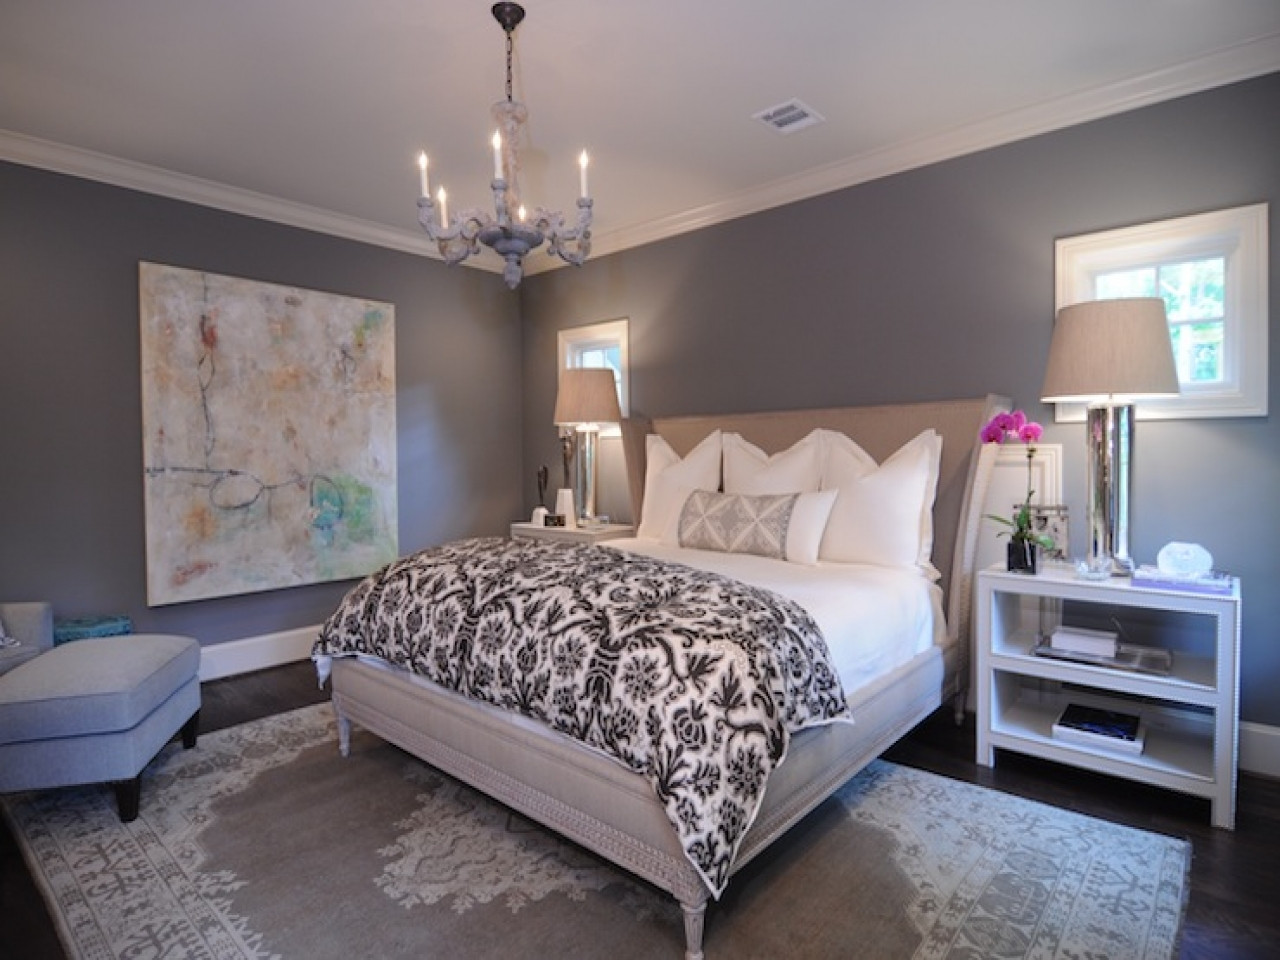 Grey Paint Colors For Bedroom
 Antique bed designs benjamin moore gray paint for bedroom